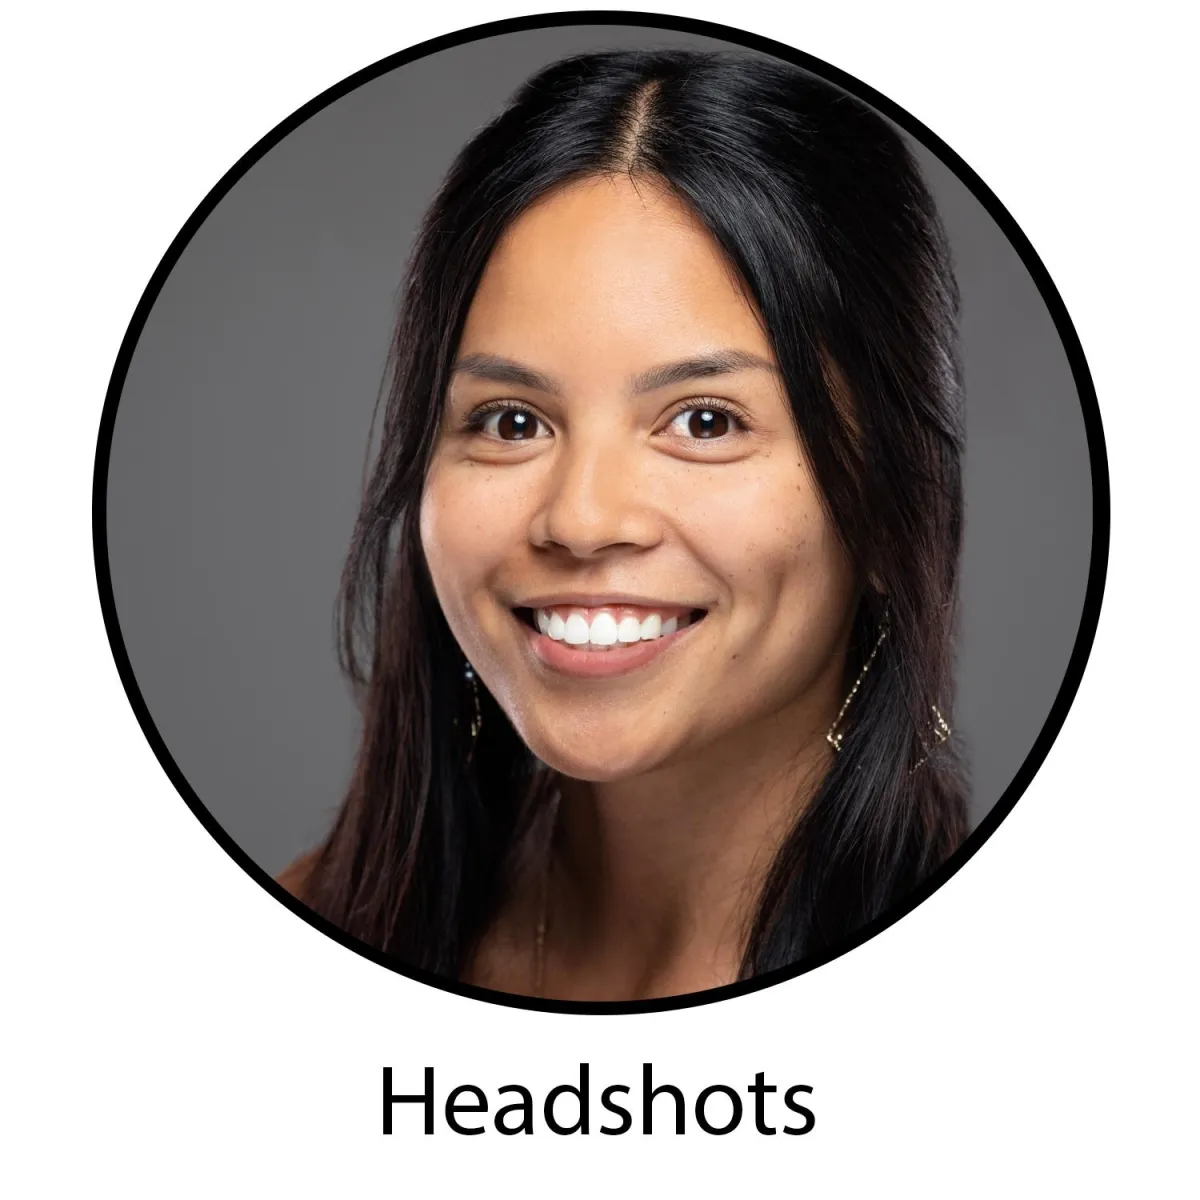 Headshot photography services Hawaii